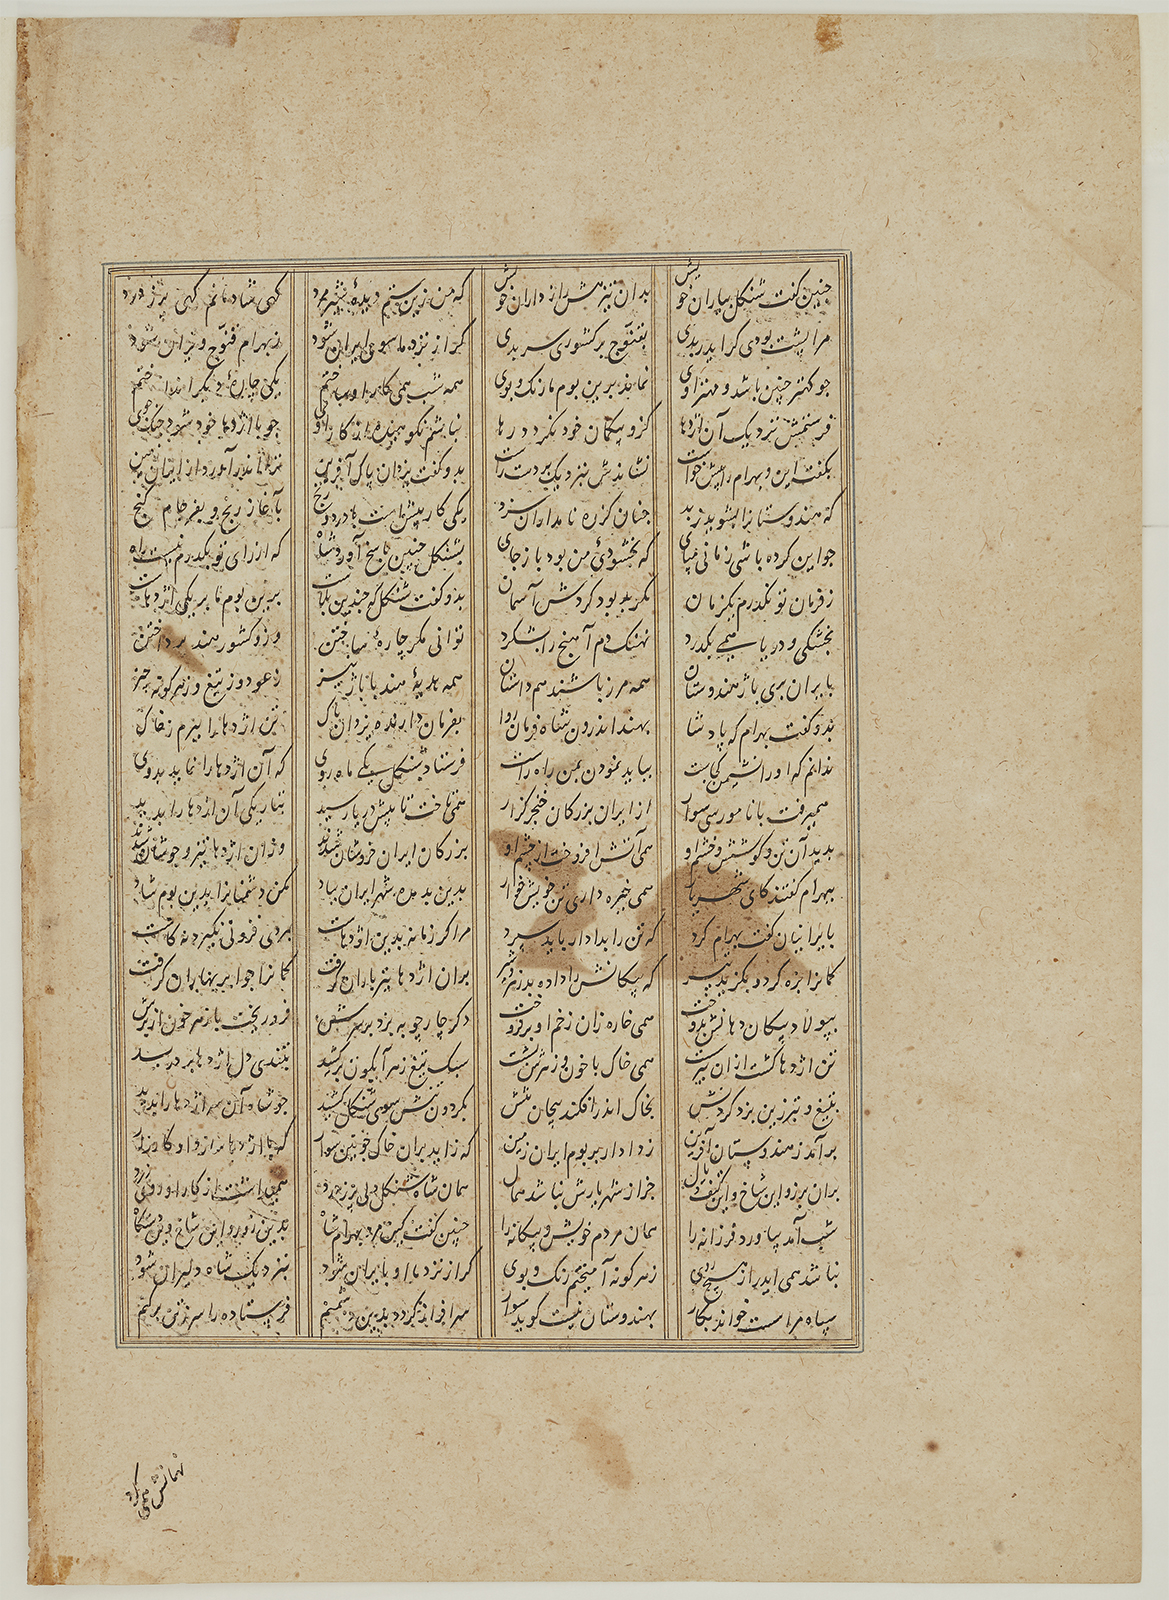 khan academy medieval manuscripts